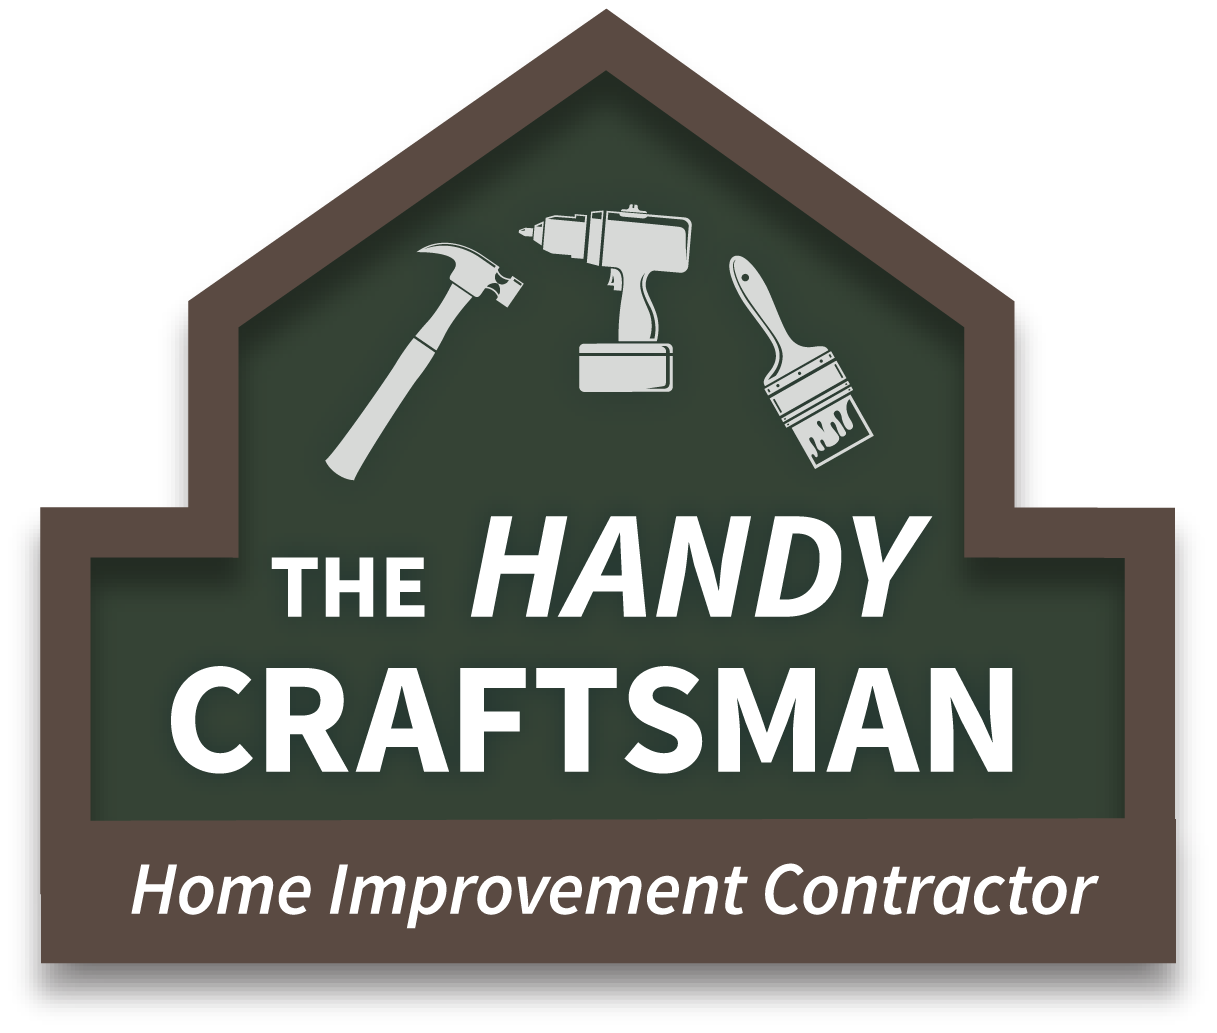 The Handy Craftsman